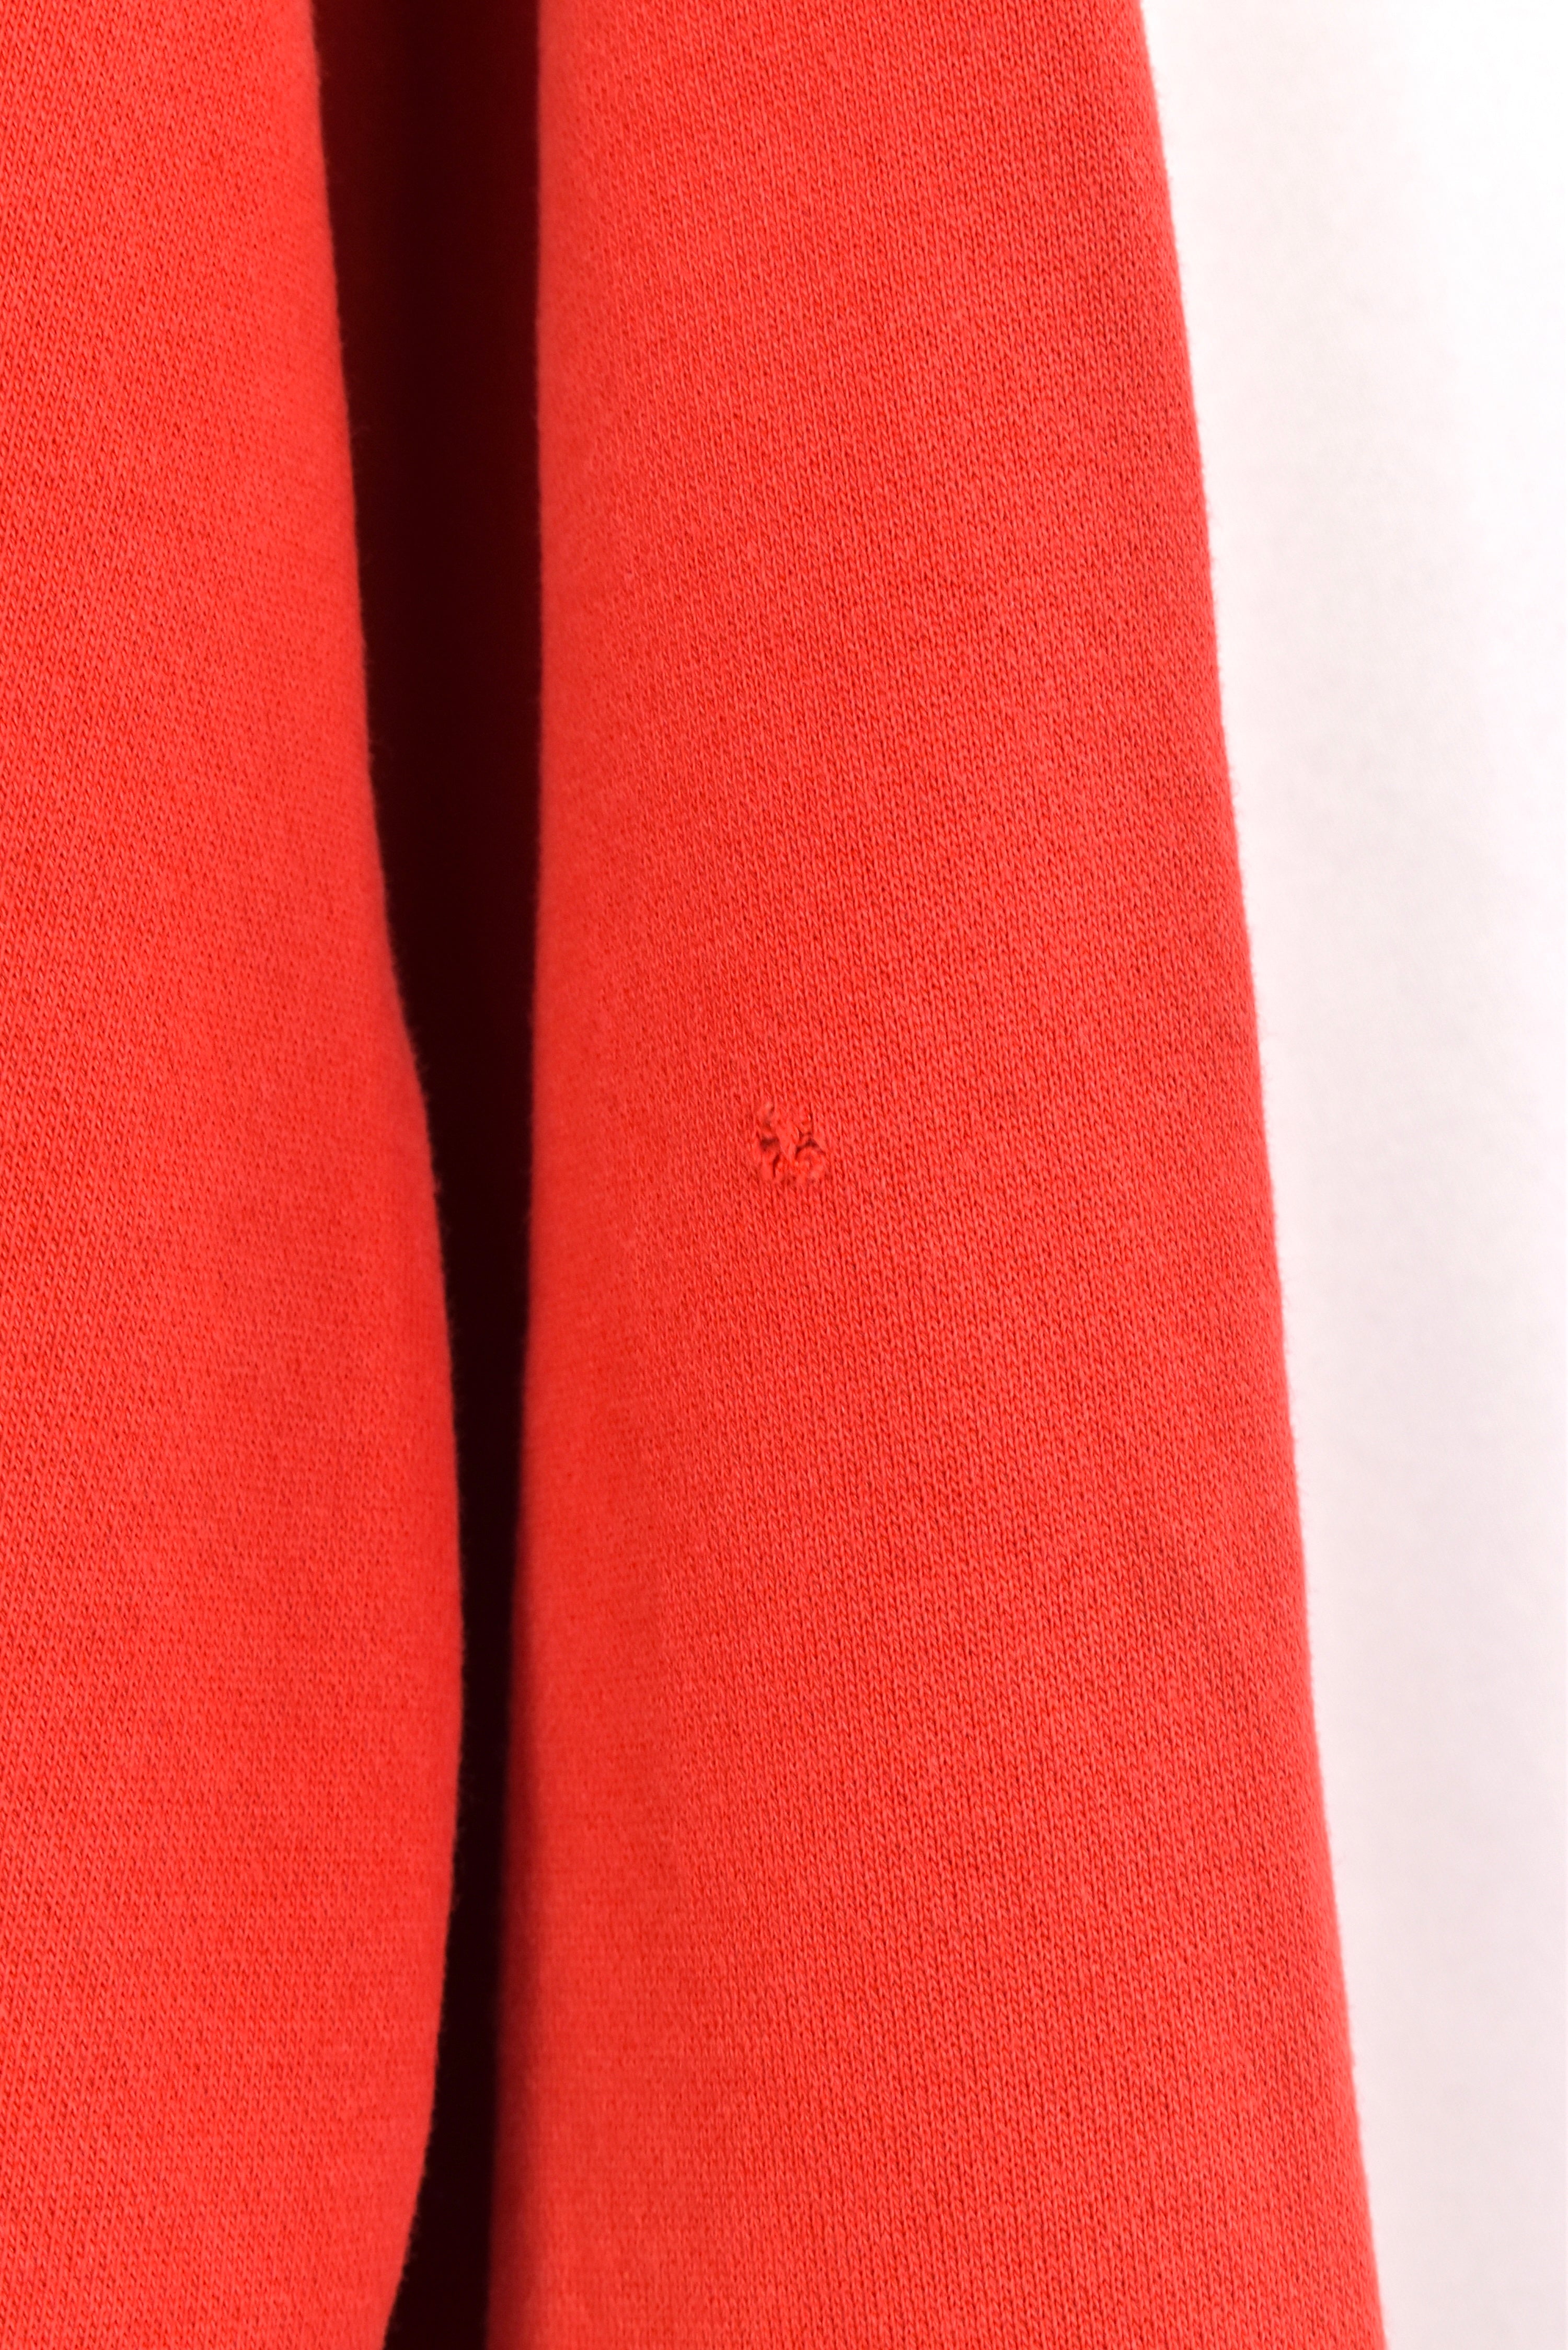 Vintage Adidas embroidered red hoodie | Large ADIDAS